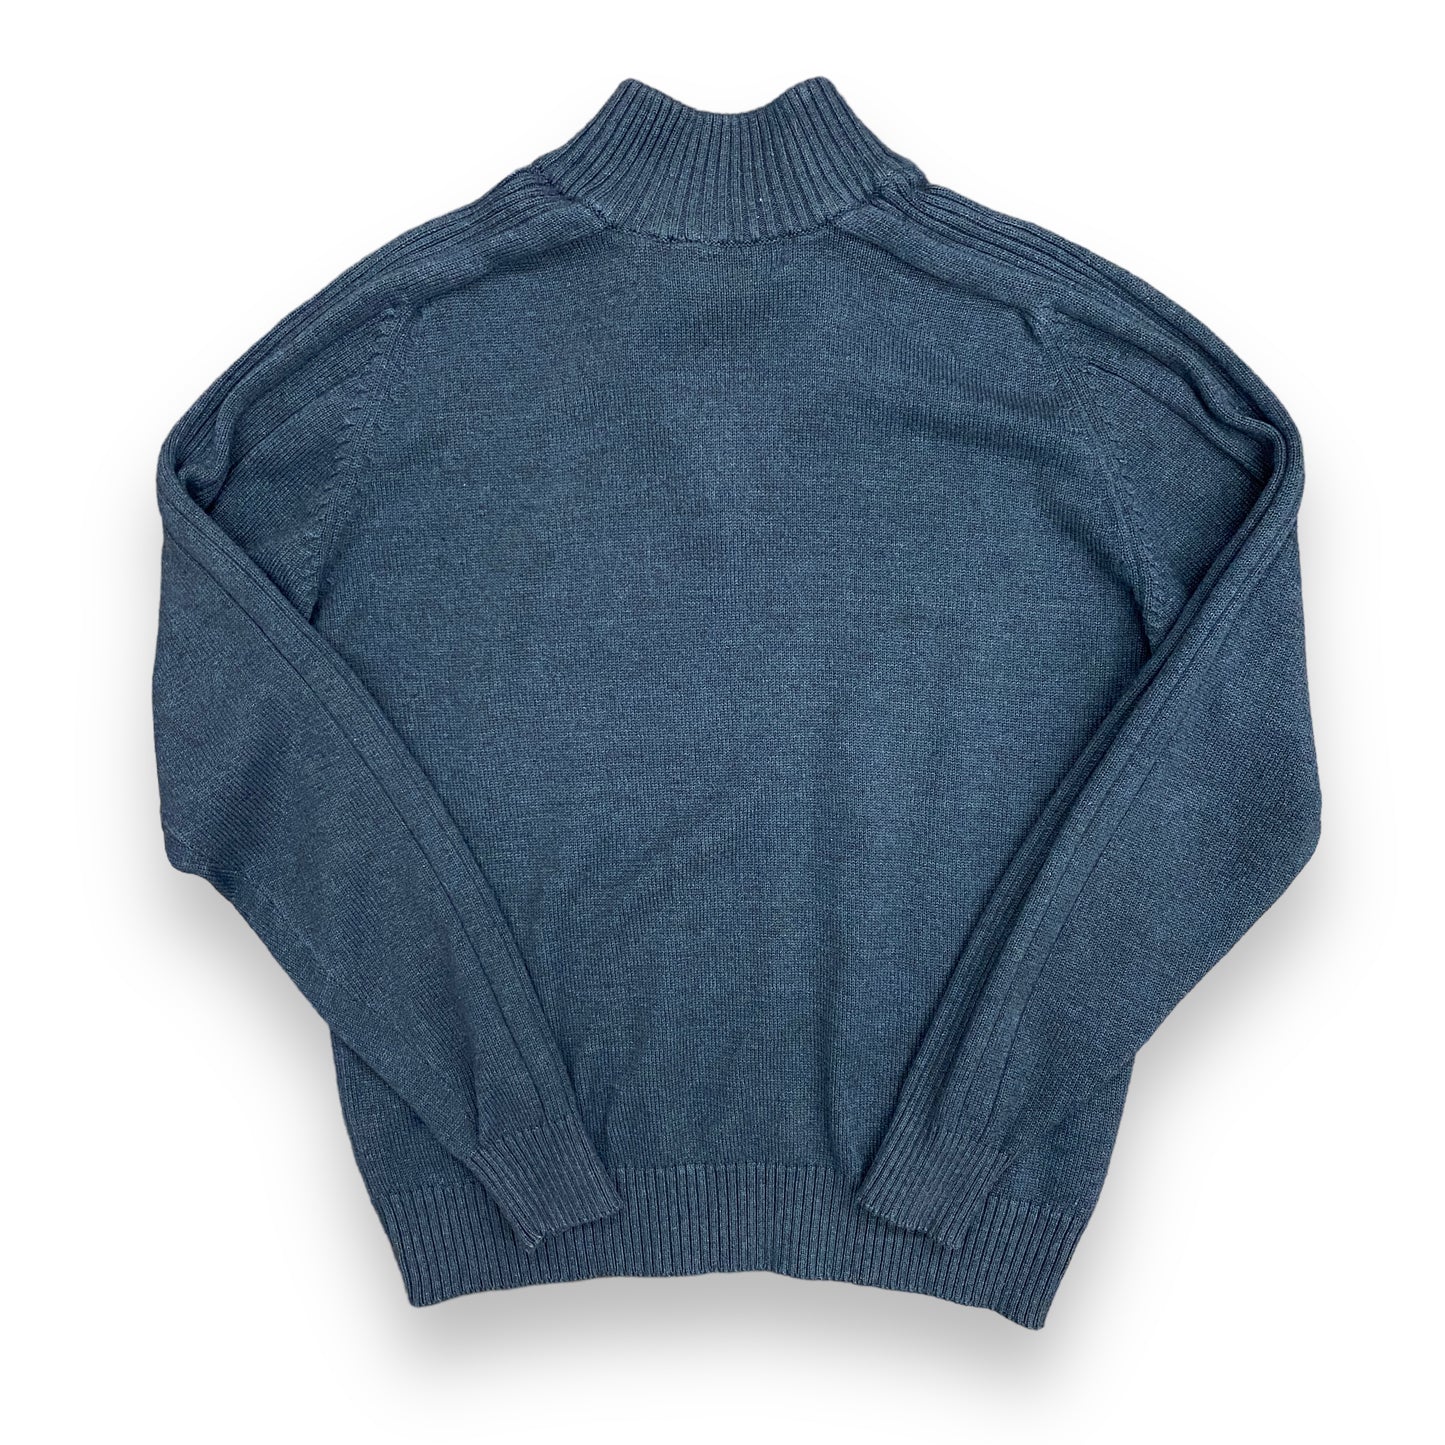 Oscar De La Renta Navy Blue Quarter Zip Sweater - Size Large